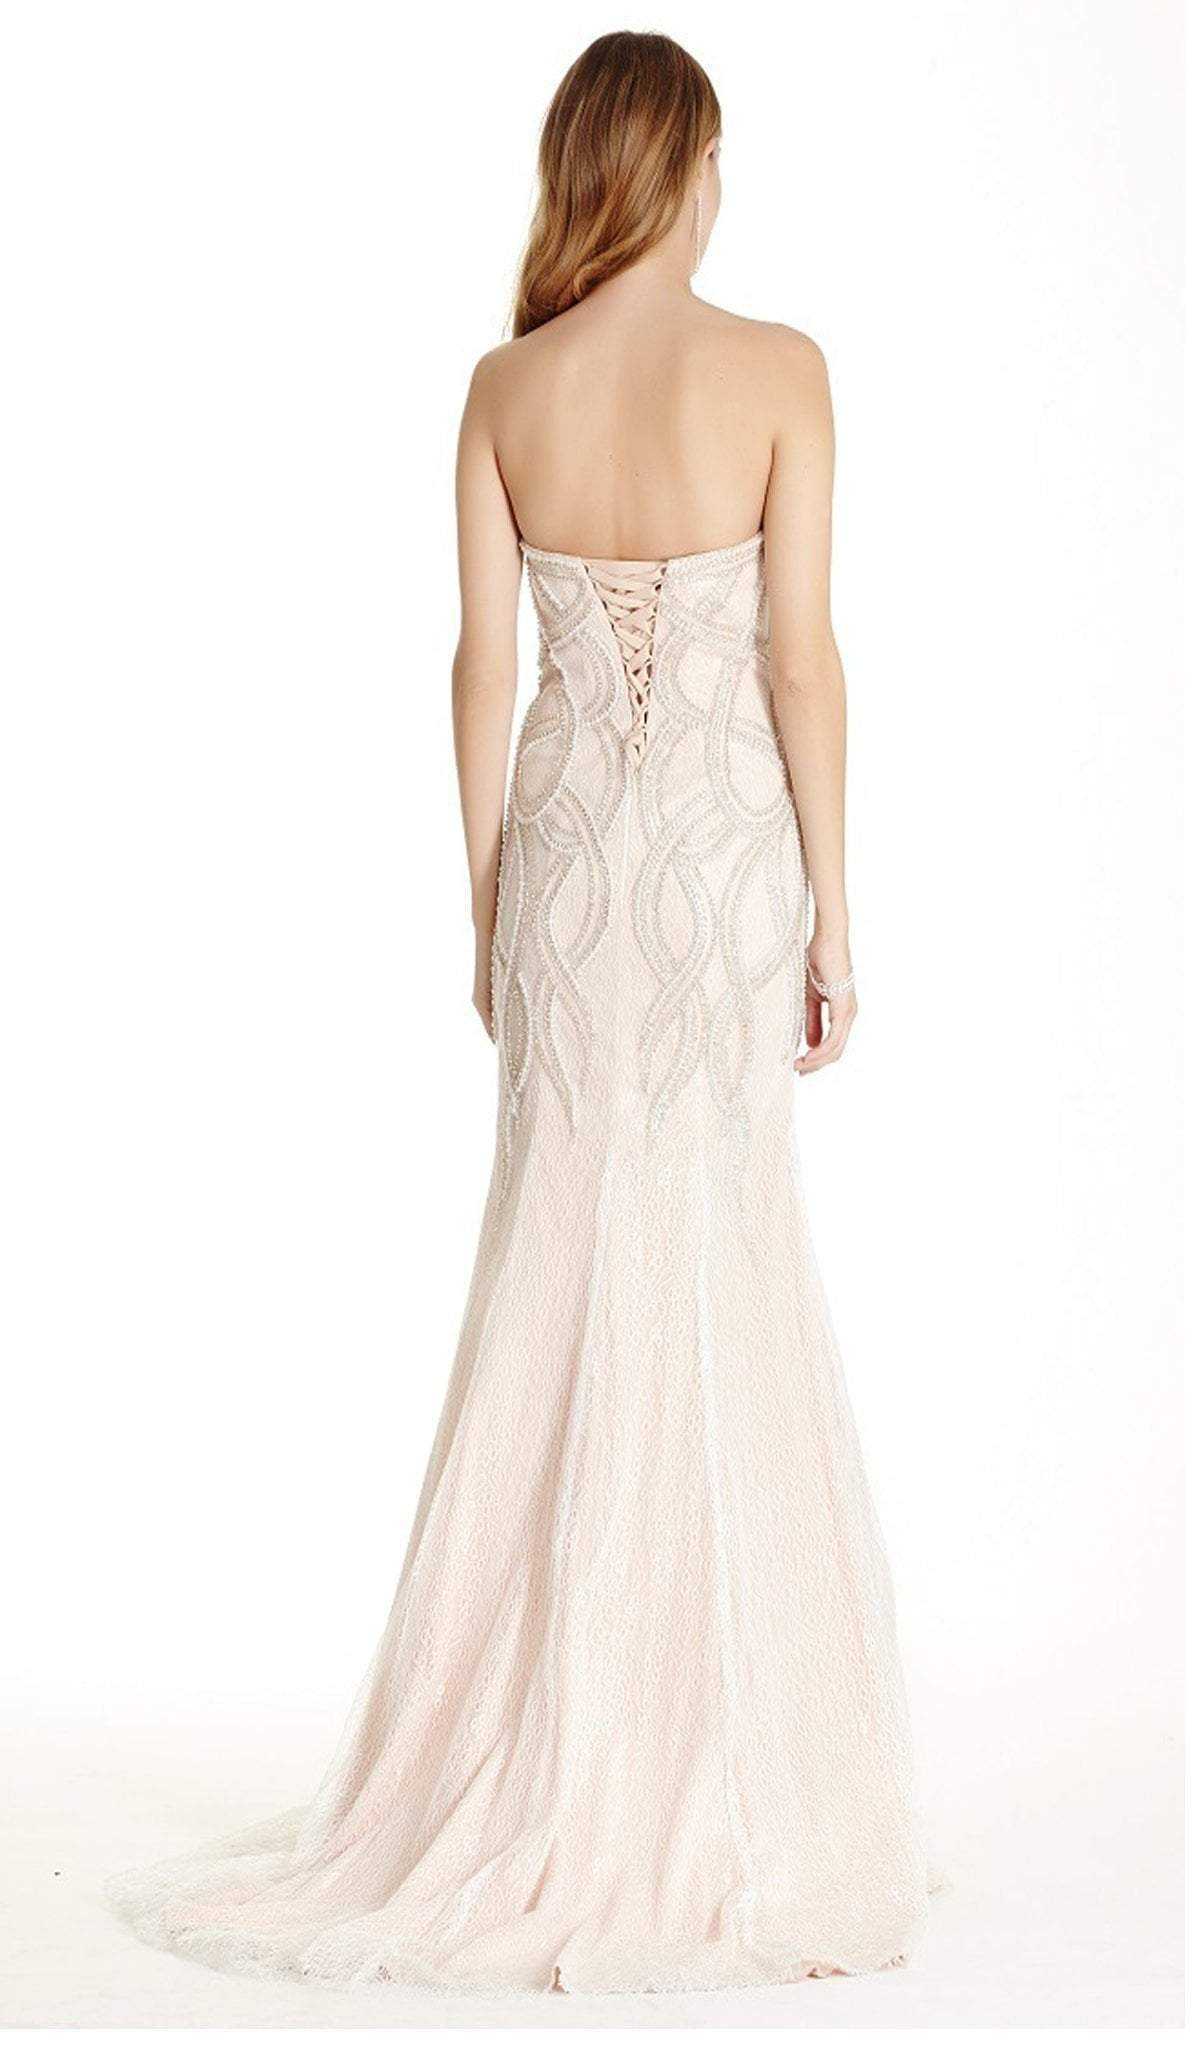 Aspeed Design, Aspeed Design - Embellished Strapless Trumpet Prom Dress